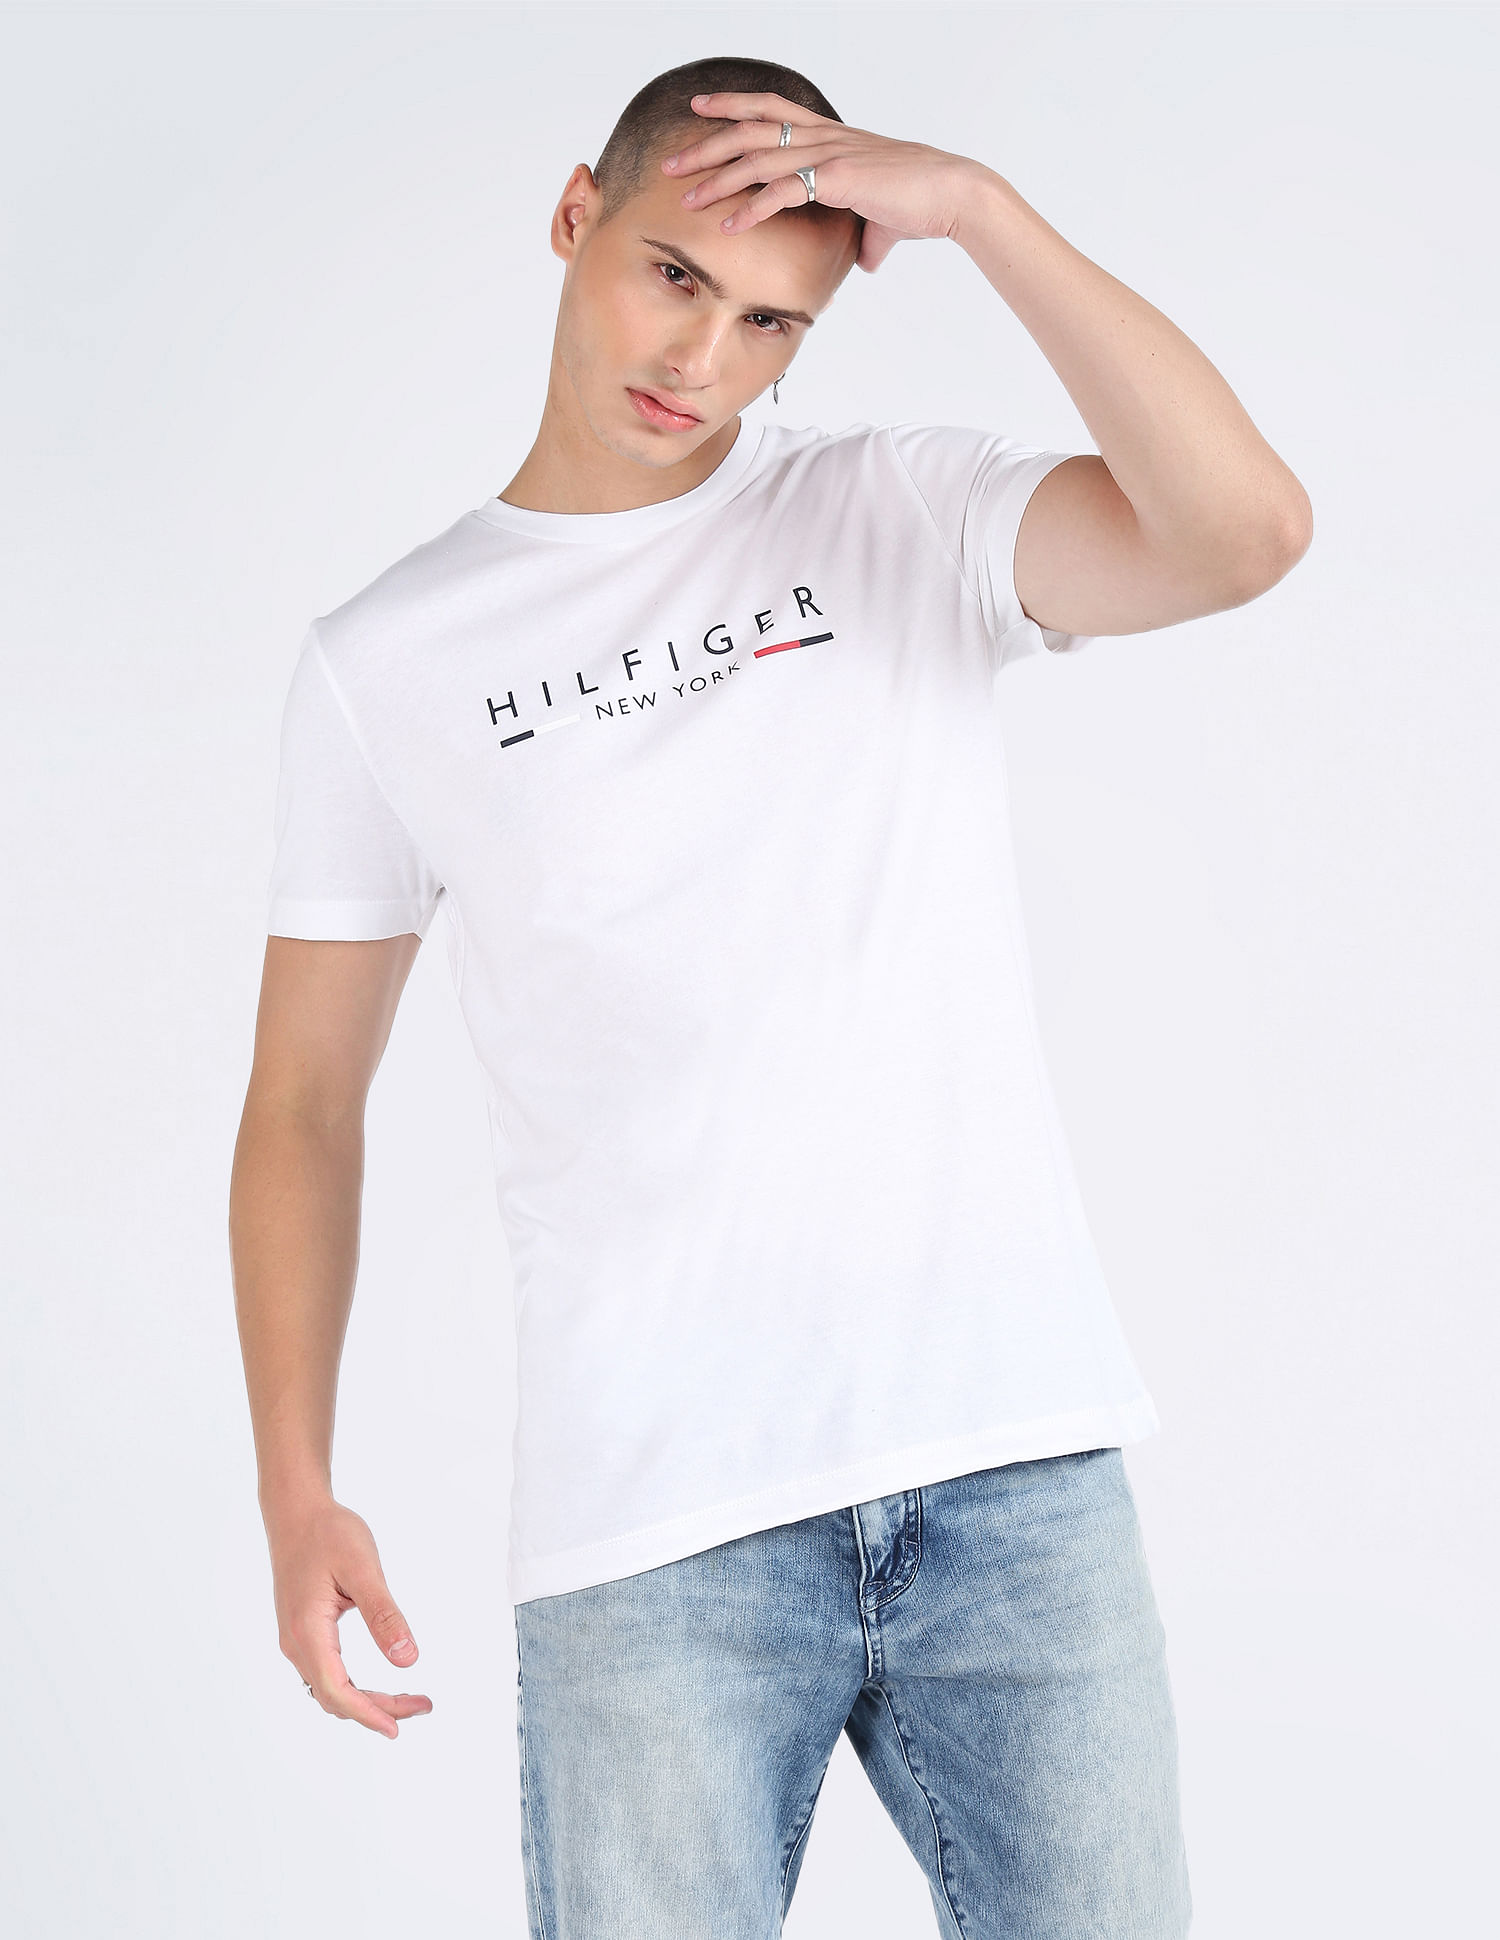 Buy Hilfiger Organic New Slim Fit T-Shirt -